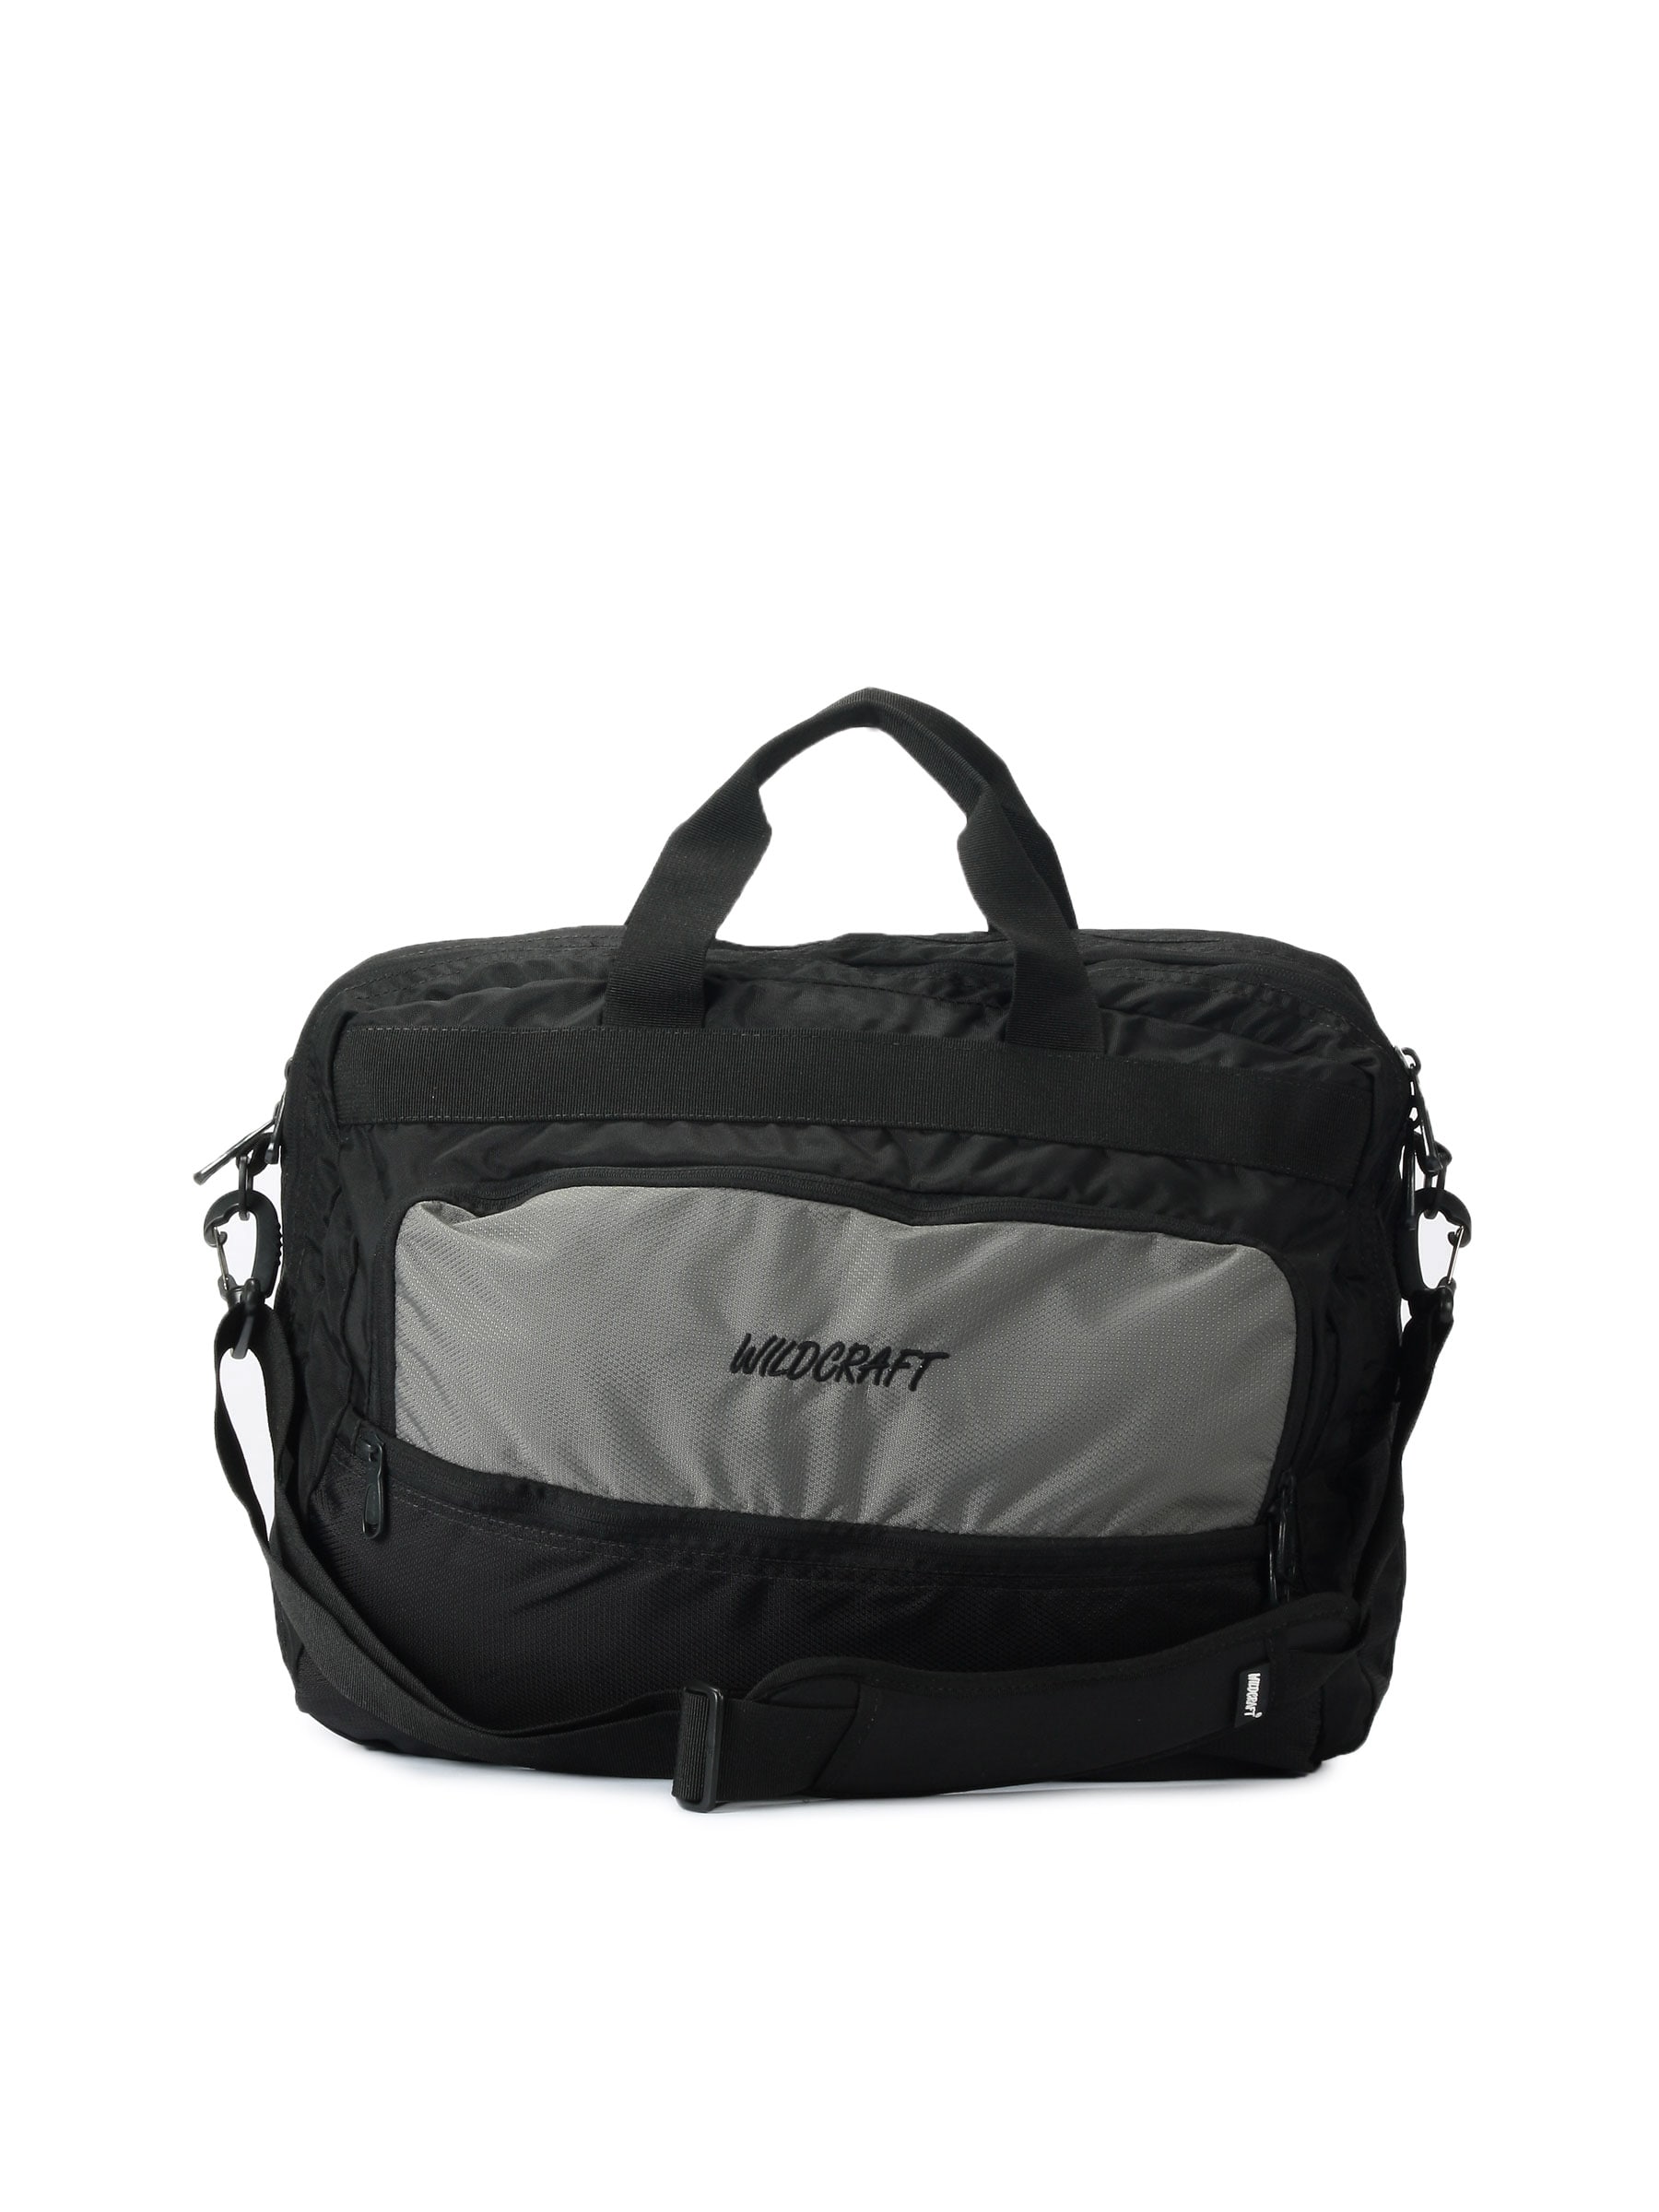 Wildcraft Unisex Black & Grey Gear for Life Laptop Messenger Bag